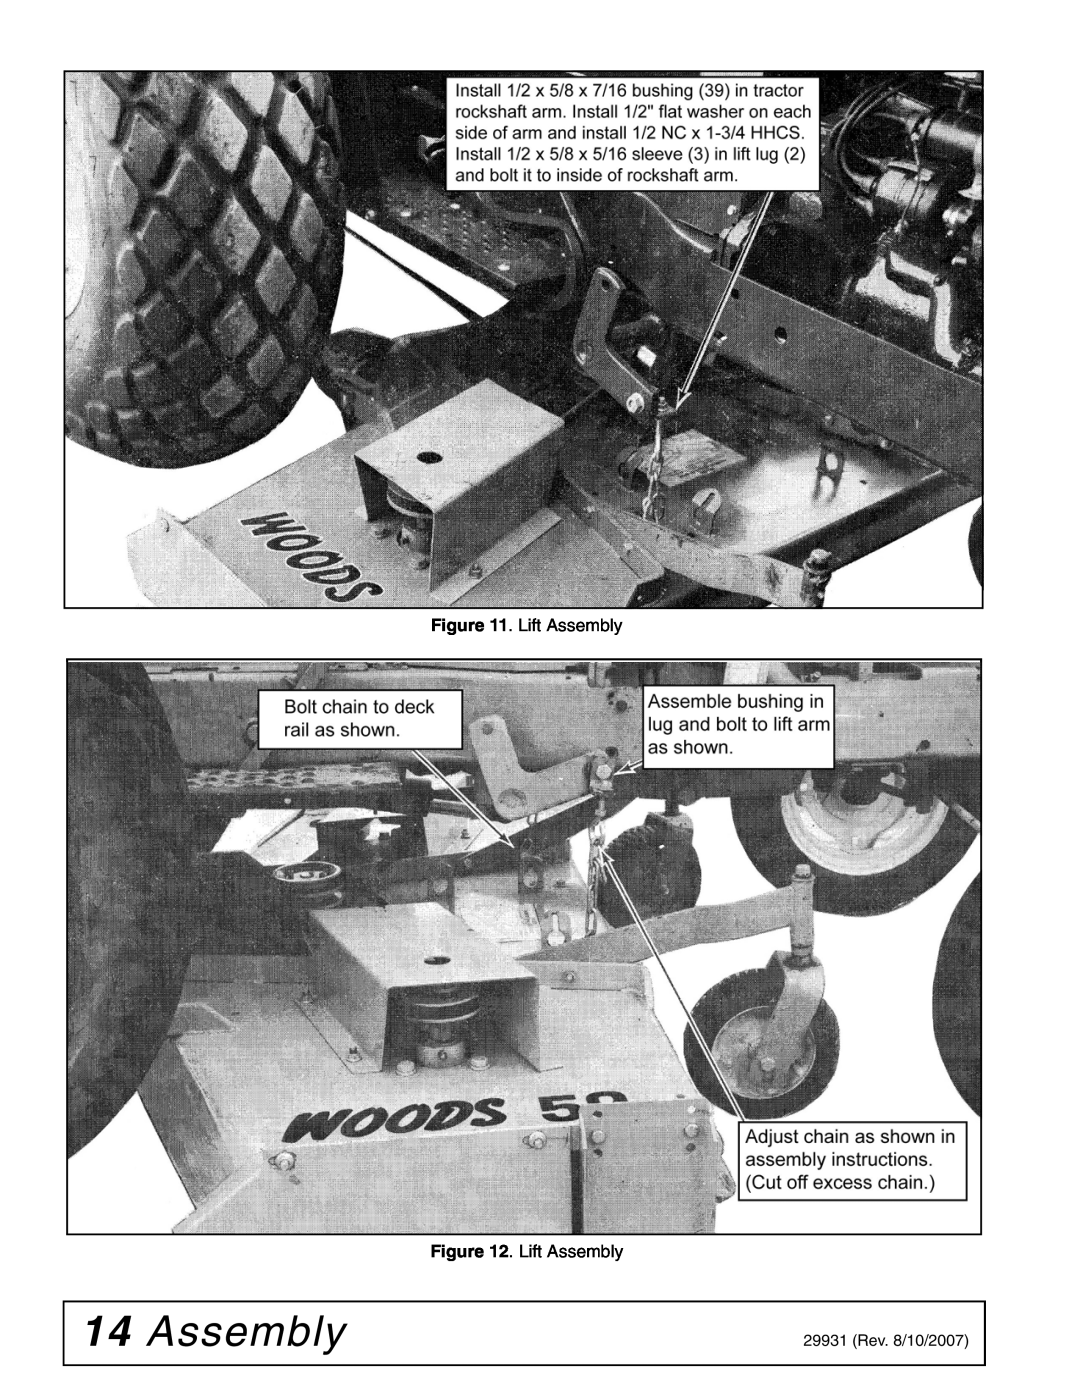 Woods Equipment 59LB-1 manual Lift Assembly . Lift Assembly 